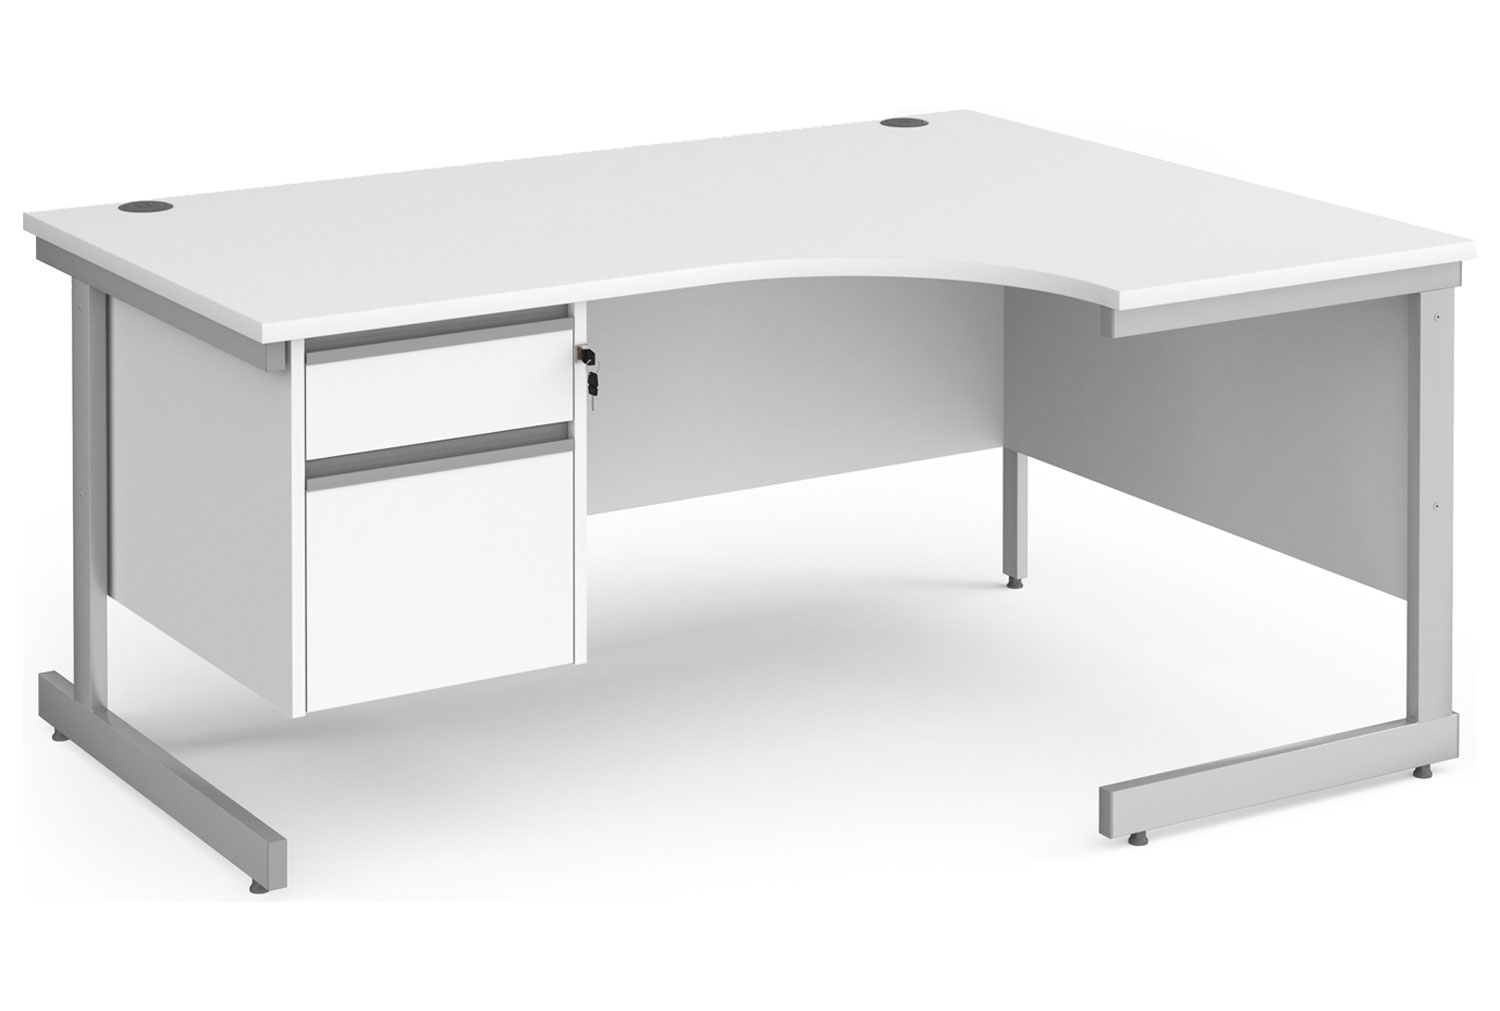 Value Line Classic+ C-Leg Right Ergo Office Desk 2 Drawers (Silver Leg), 160wx120/80dx73h (cm), White